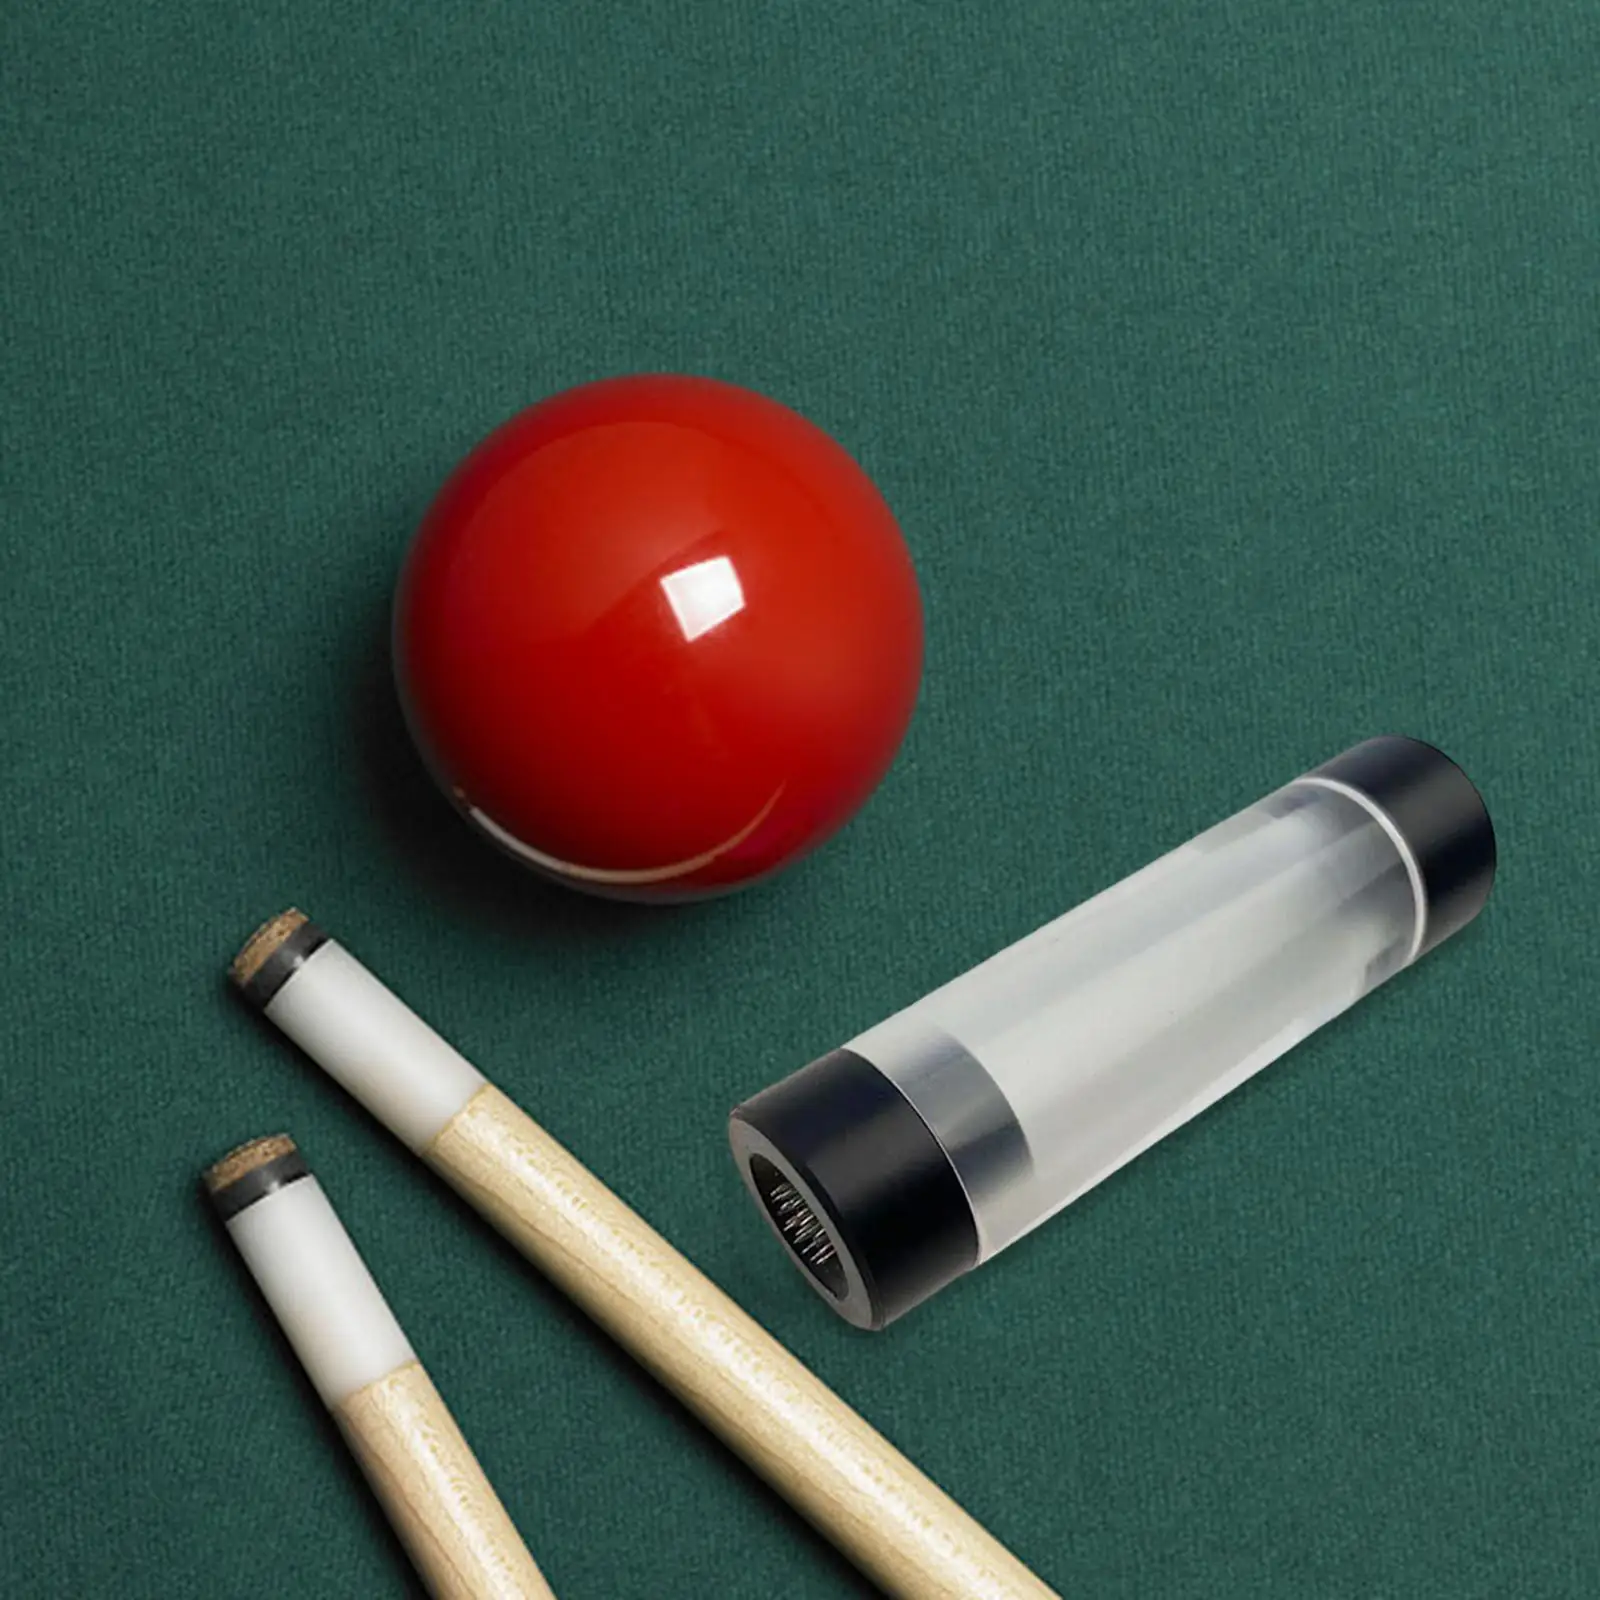 Billiard Pool Cue Tip Shaper, Cue Tip Burnisher/Shaper/Tapper Pool Tip Repair Tool Accessory for Snooker